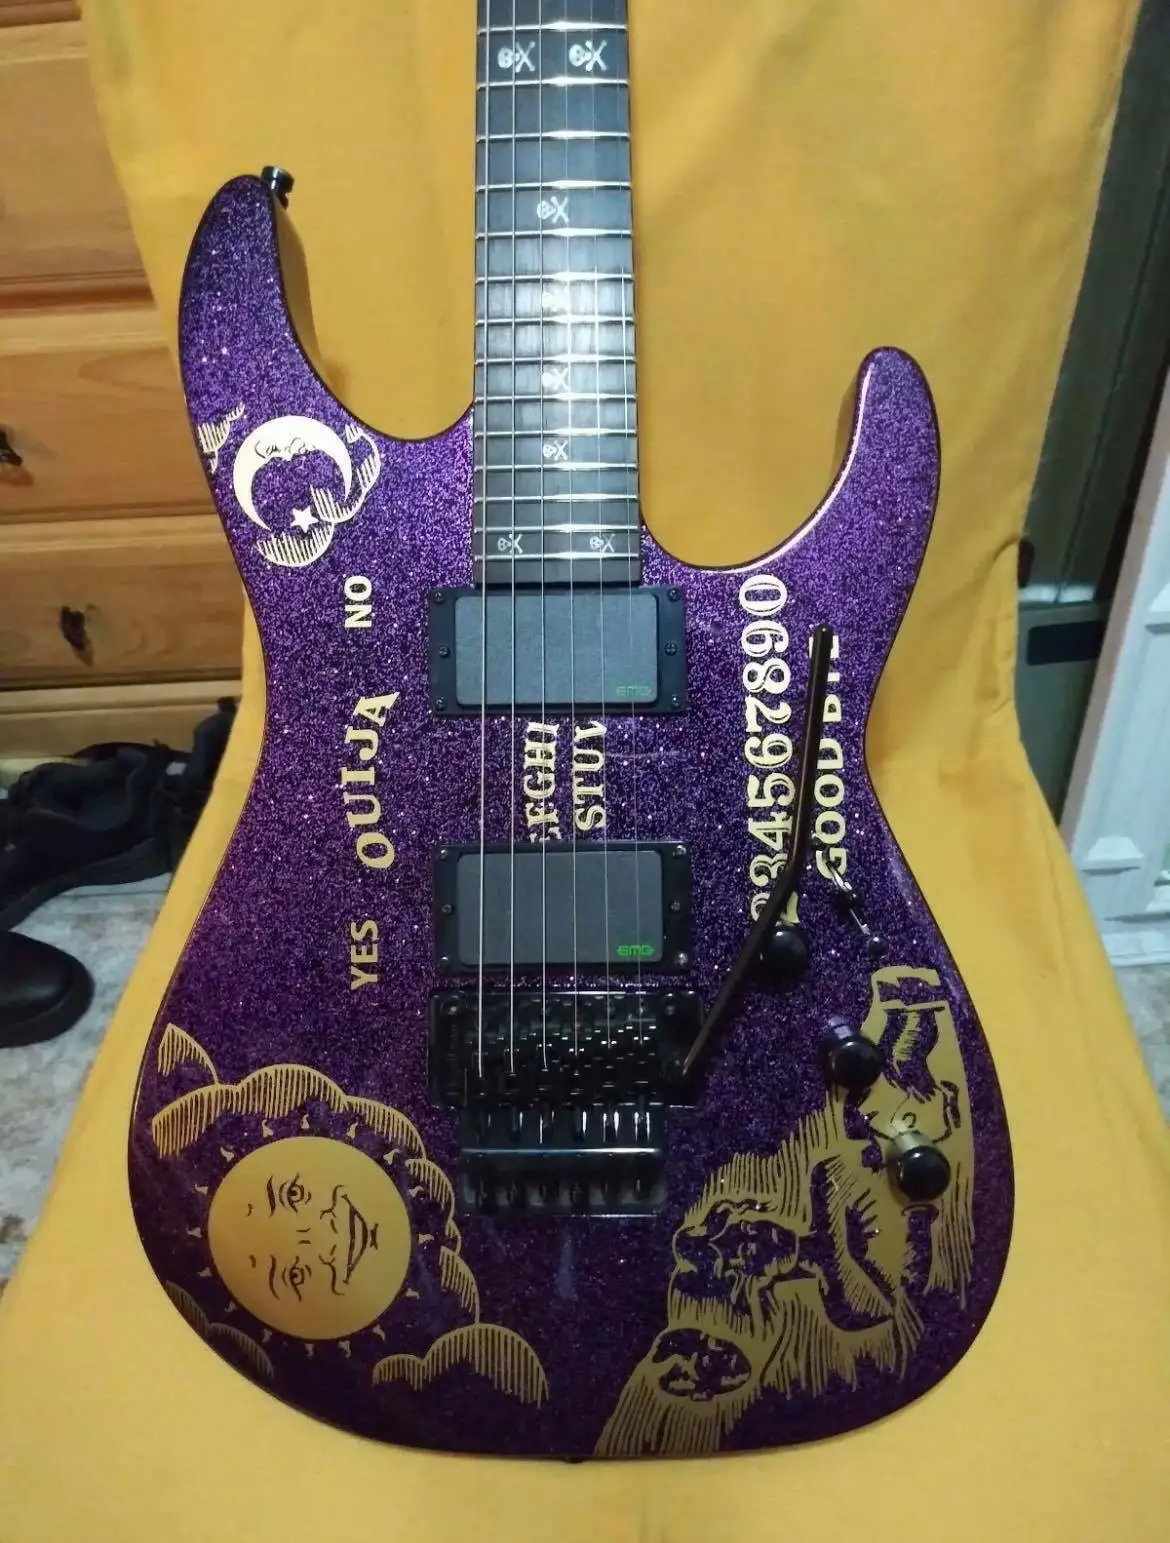 

KH-2 Ouija Metallic Purple Sparkle Kirk Hammett Signature Electric Guitar Reverse Headstock, Floyd Rose Tremolo, Black hardware